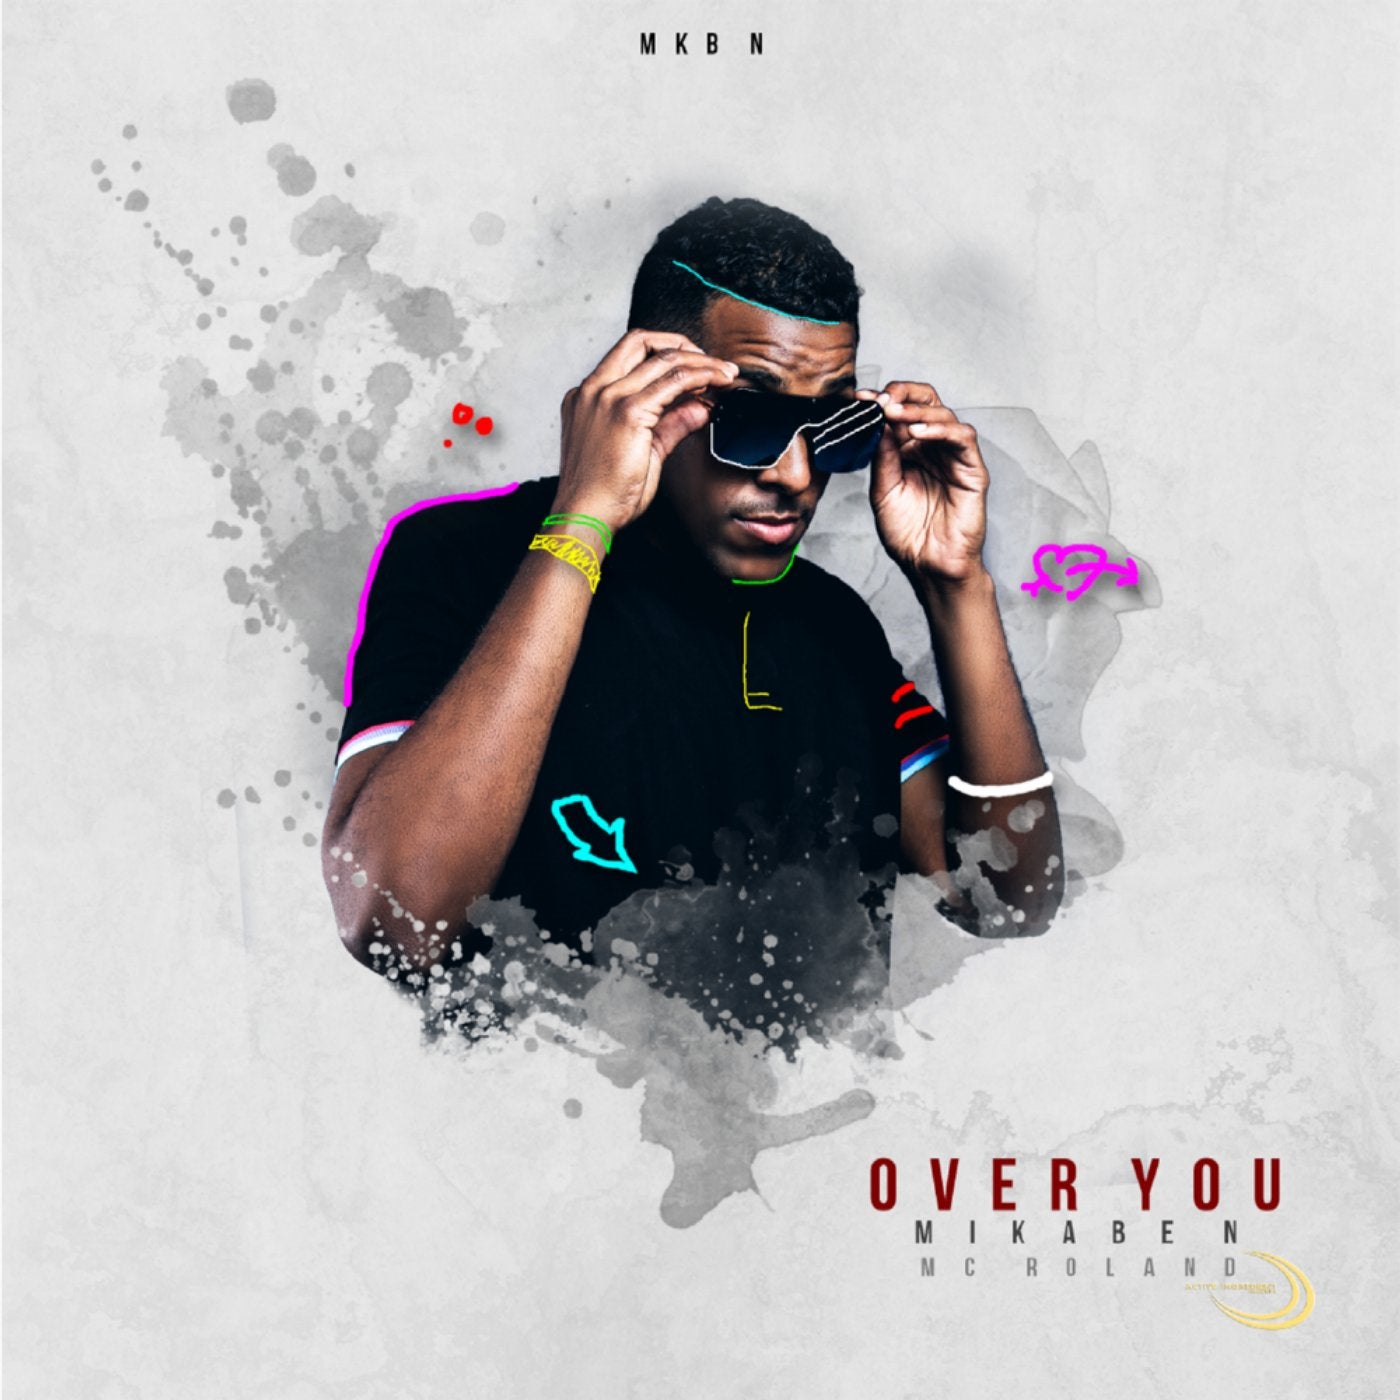 Over You (Main Mix)